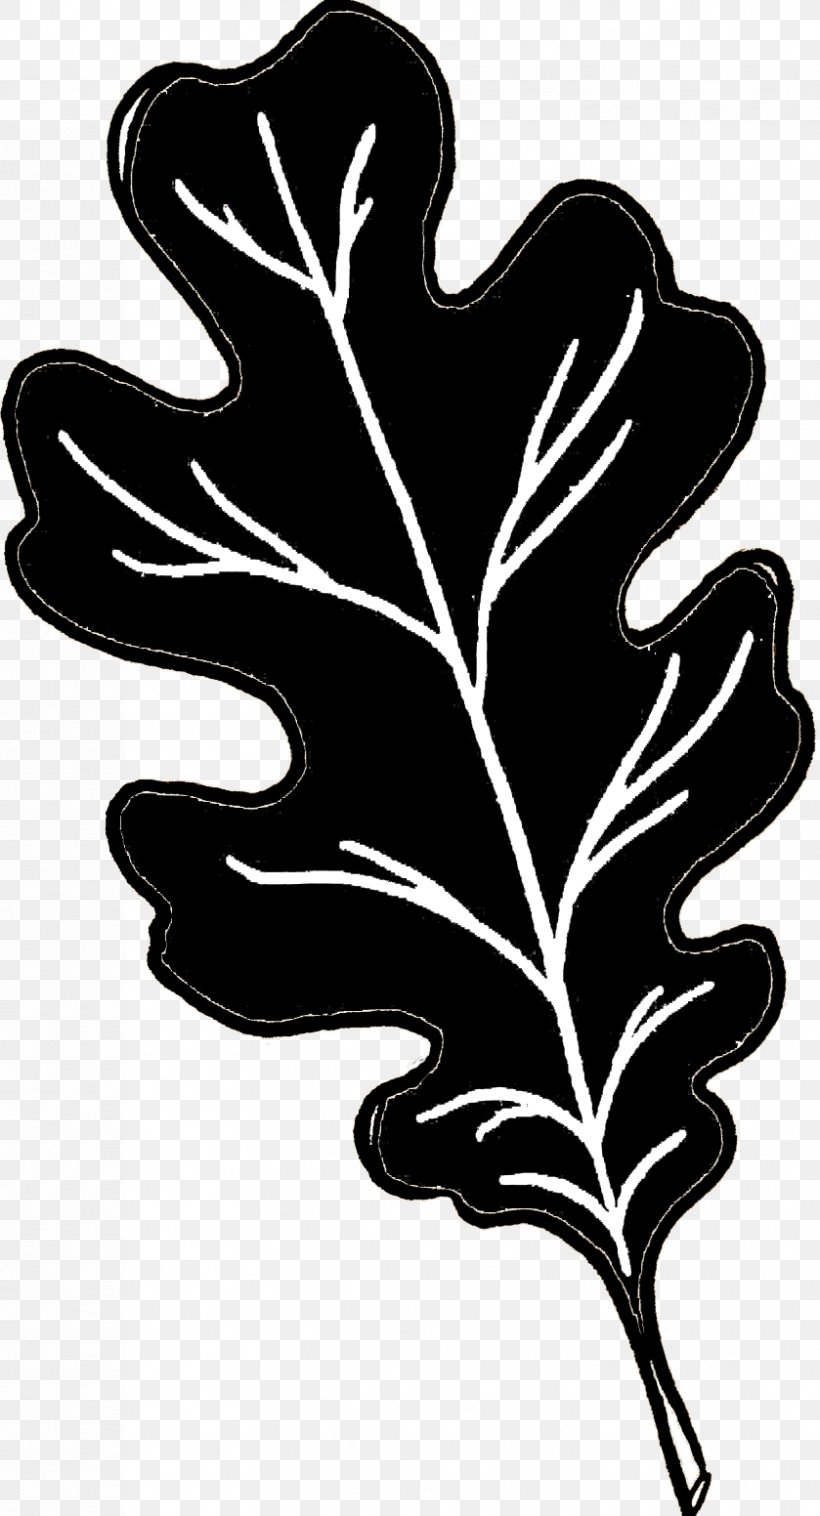 White Oak Image Clip Art Transparency, PNG, 839x1552px, White Oak, Acorn, Black Oak, Black White M, Blackandwhite Download Free